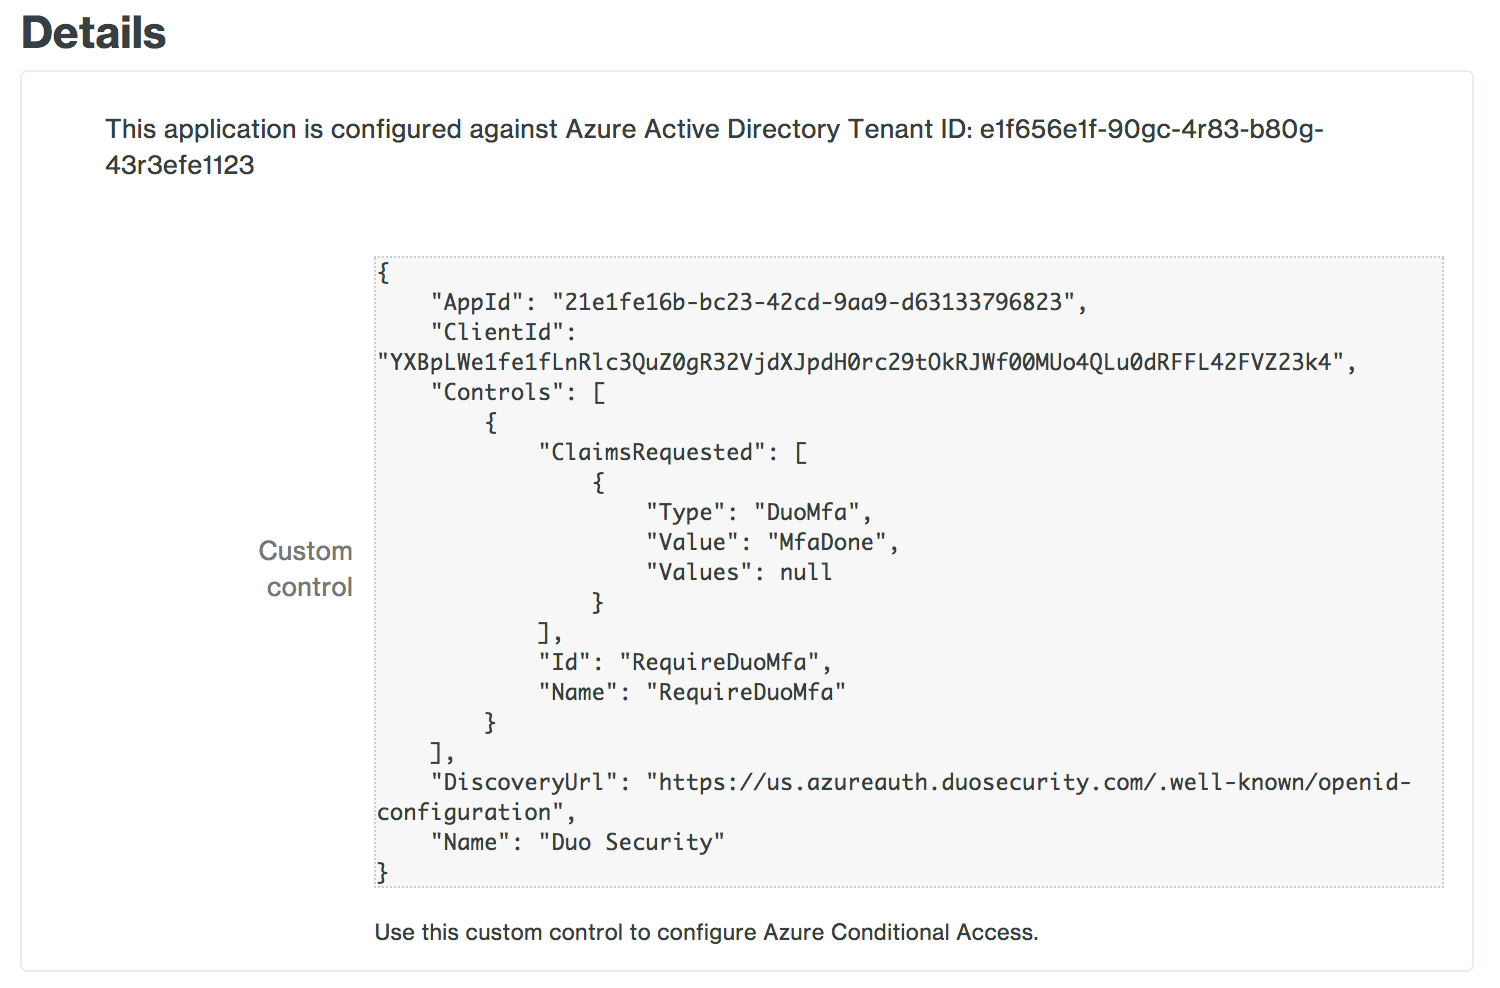 Duo Azure CA Application JSON